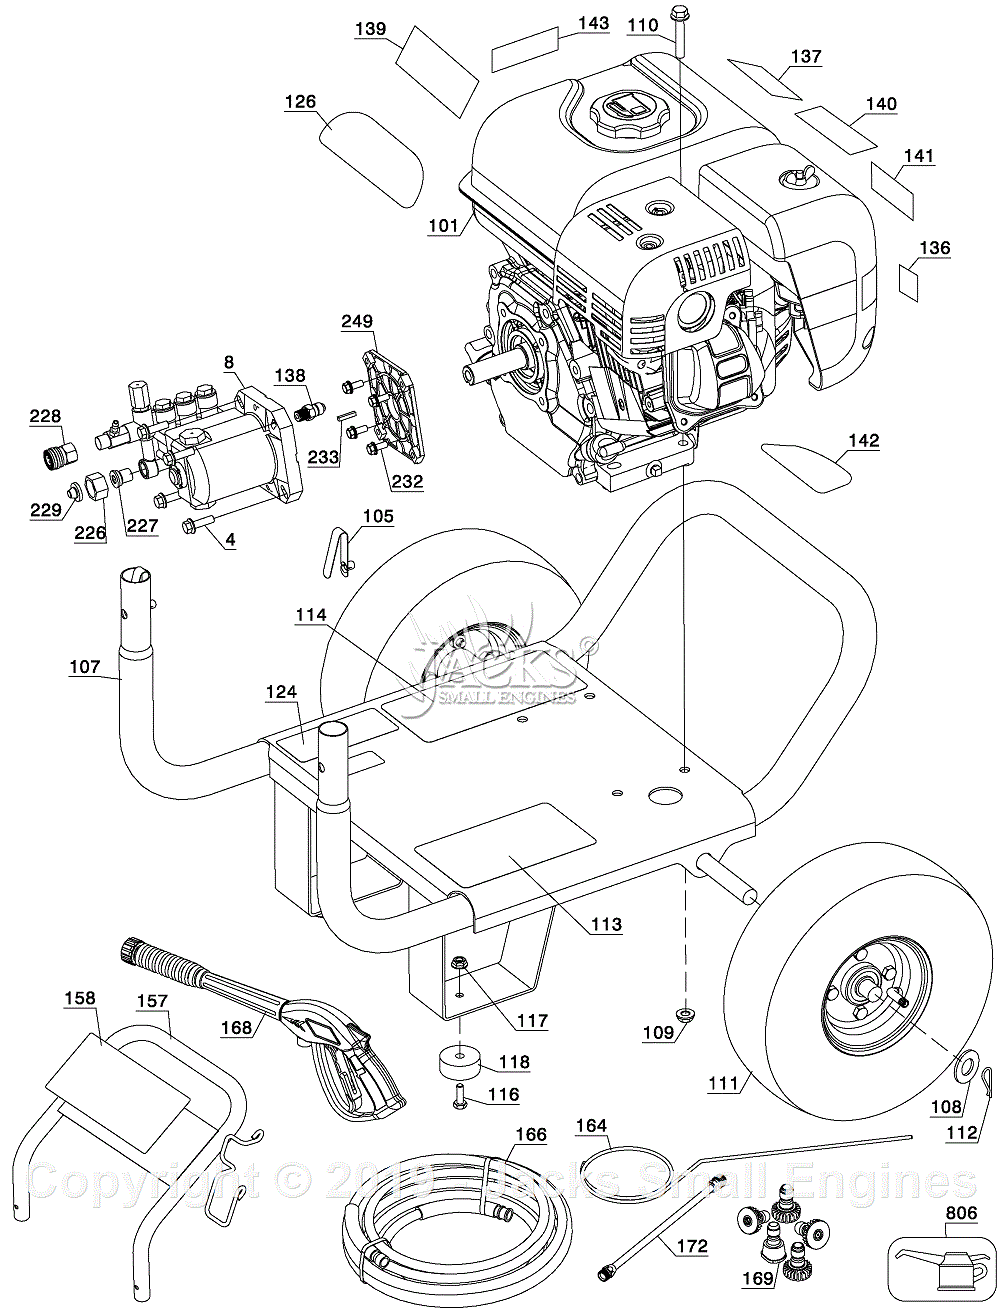 https://az417944.vo.msecnd.net/diagrams/manufacturer/black-decker/pressure-washer/bdp2600-type-2/pressure-washer/diagram_1.gif